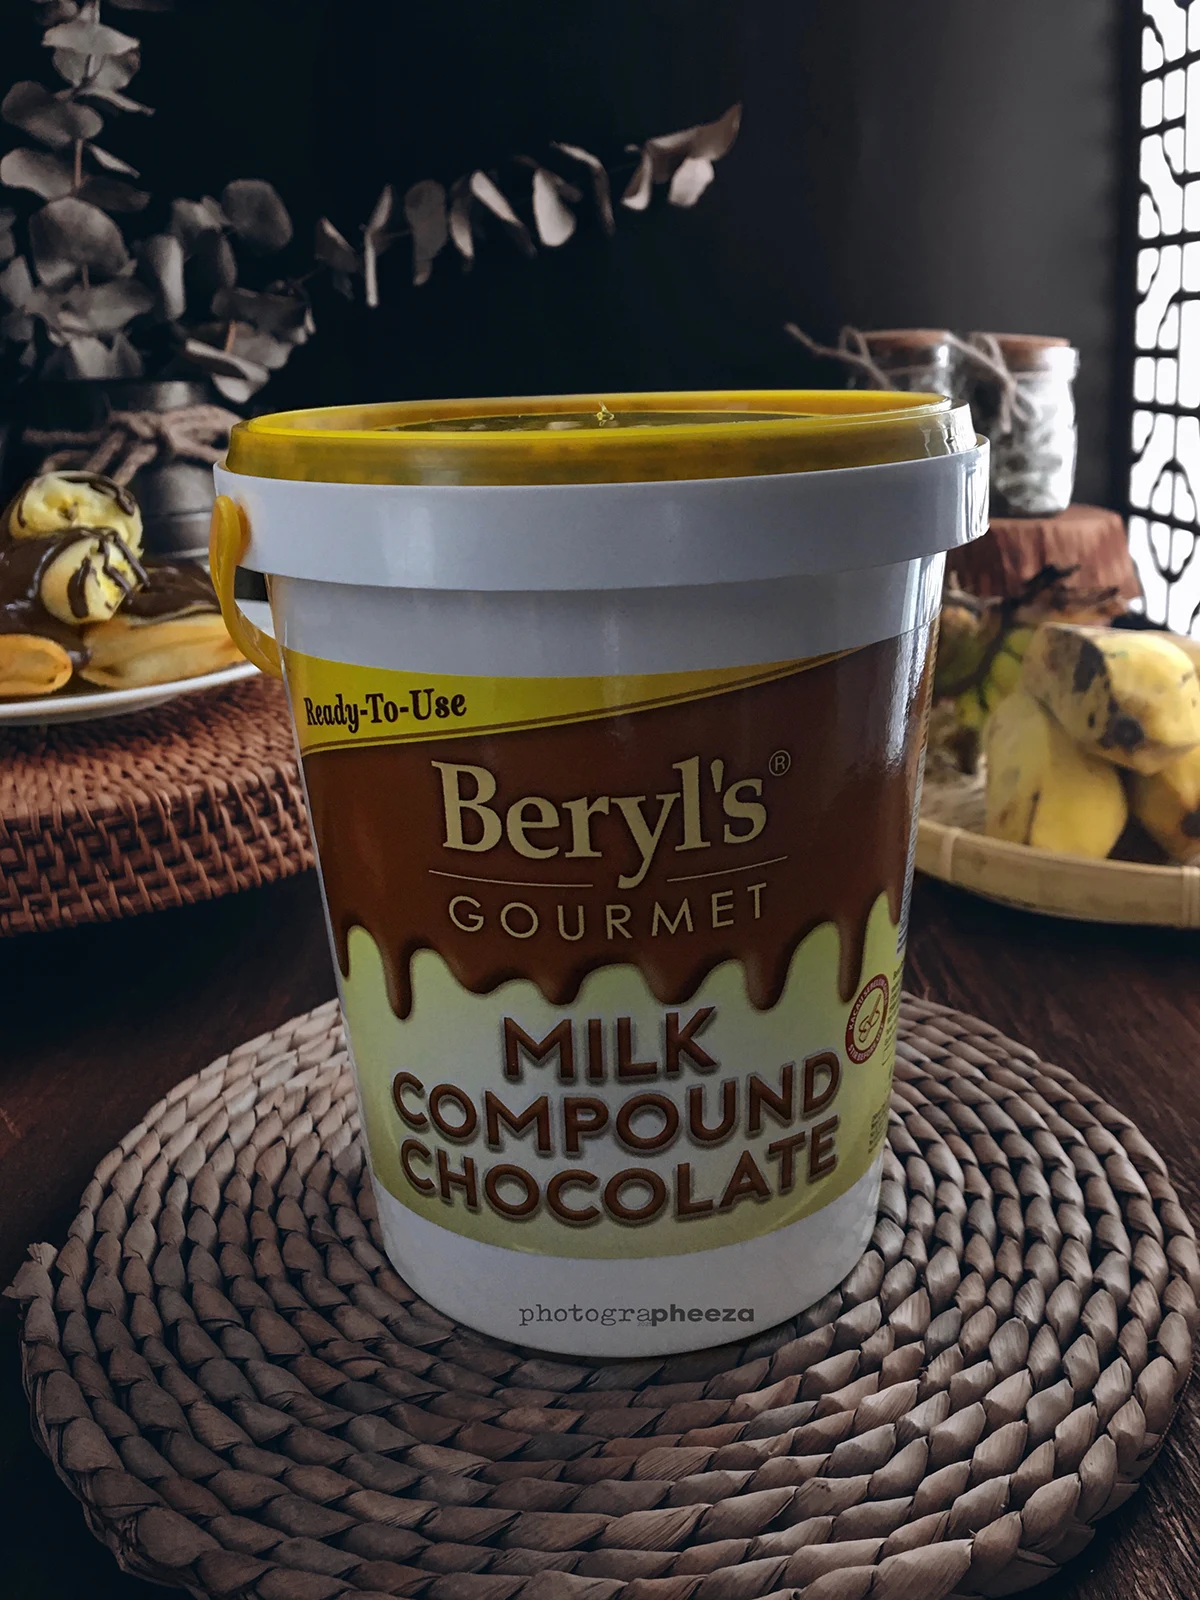 Beryl's Gourmet Milk Compound Chocolate